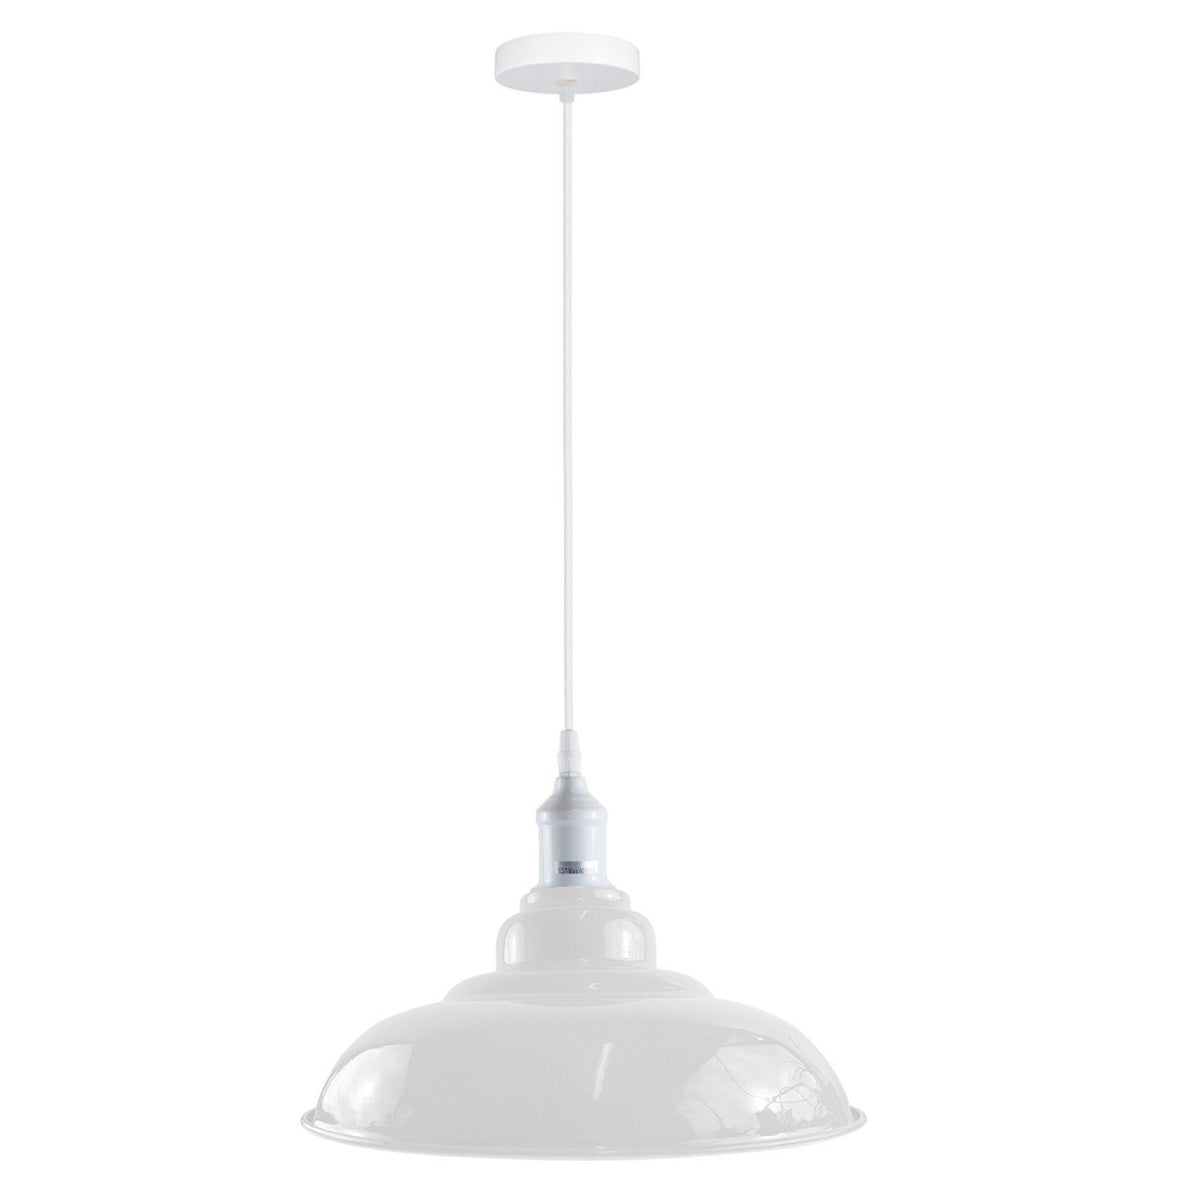 Colours Industrial Retro Loft Metal Ceiling Lamp Shade Pendant Light~1642 - LEDSone UK Ltd